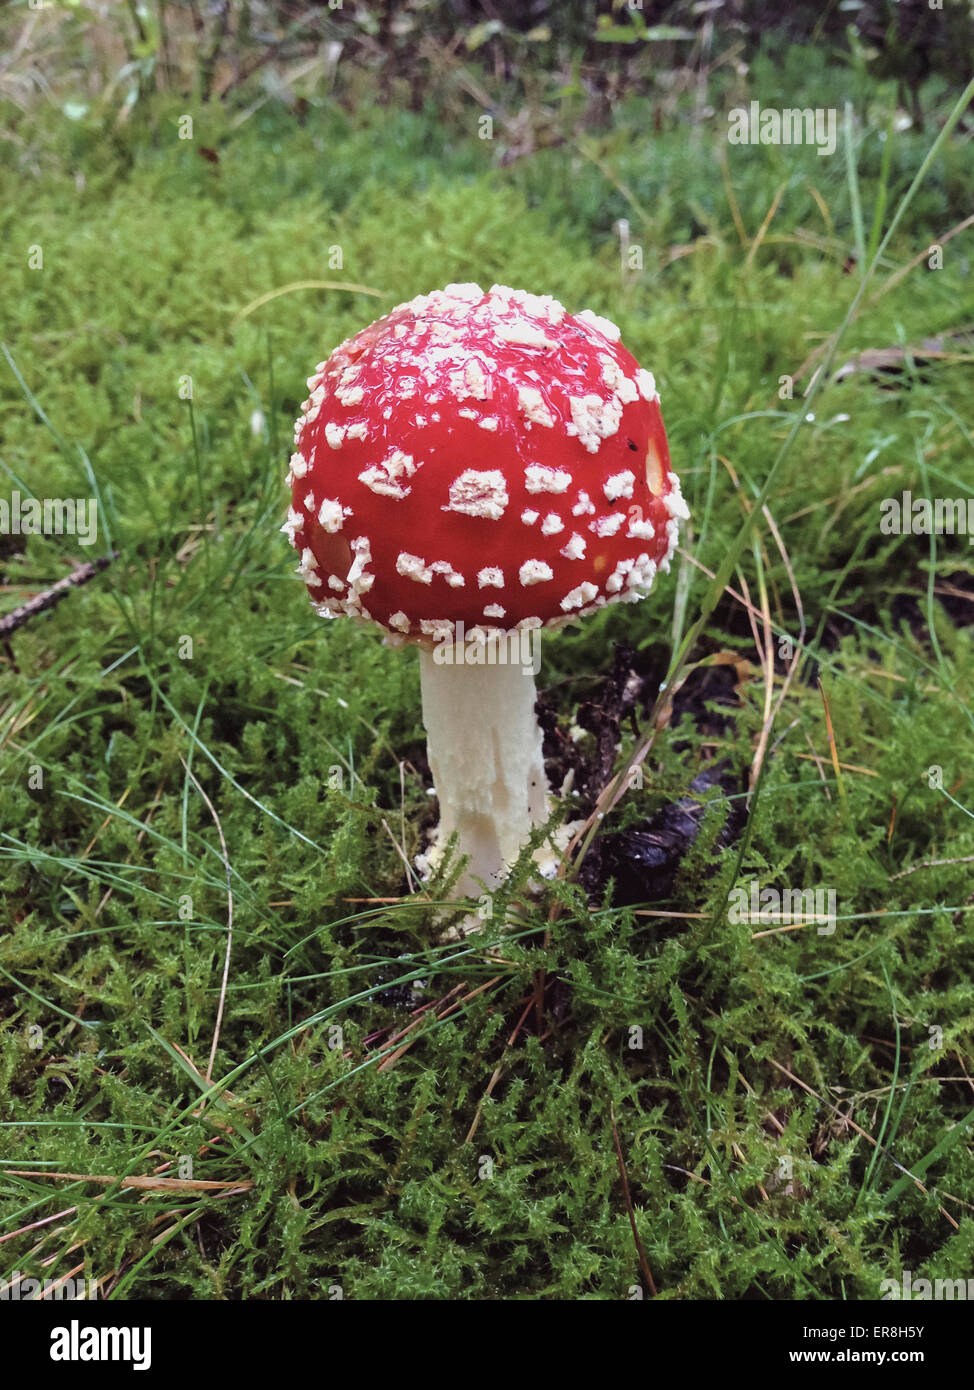 Fly agaric mushroom growing on grass Stock Photo